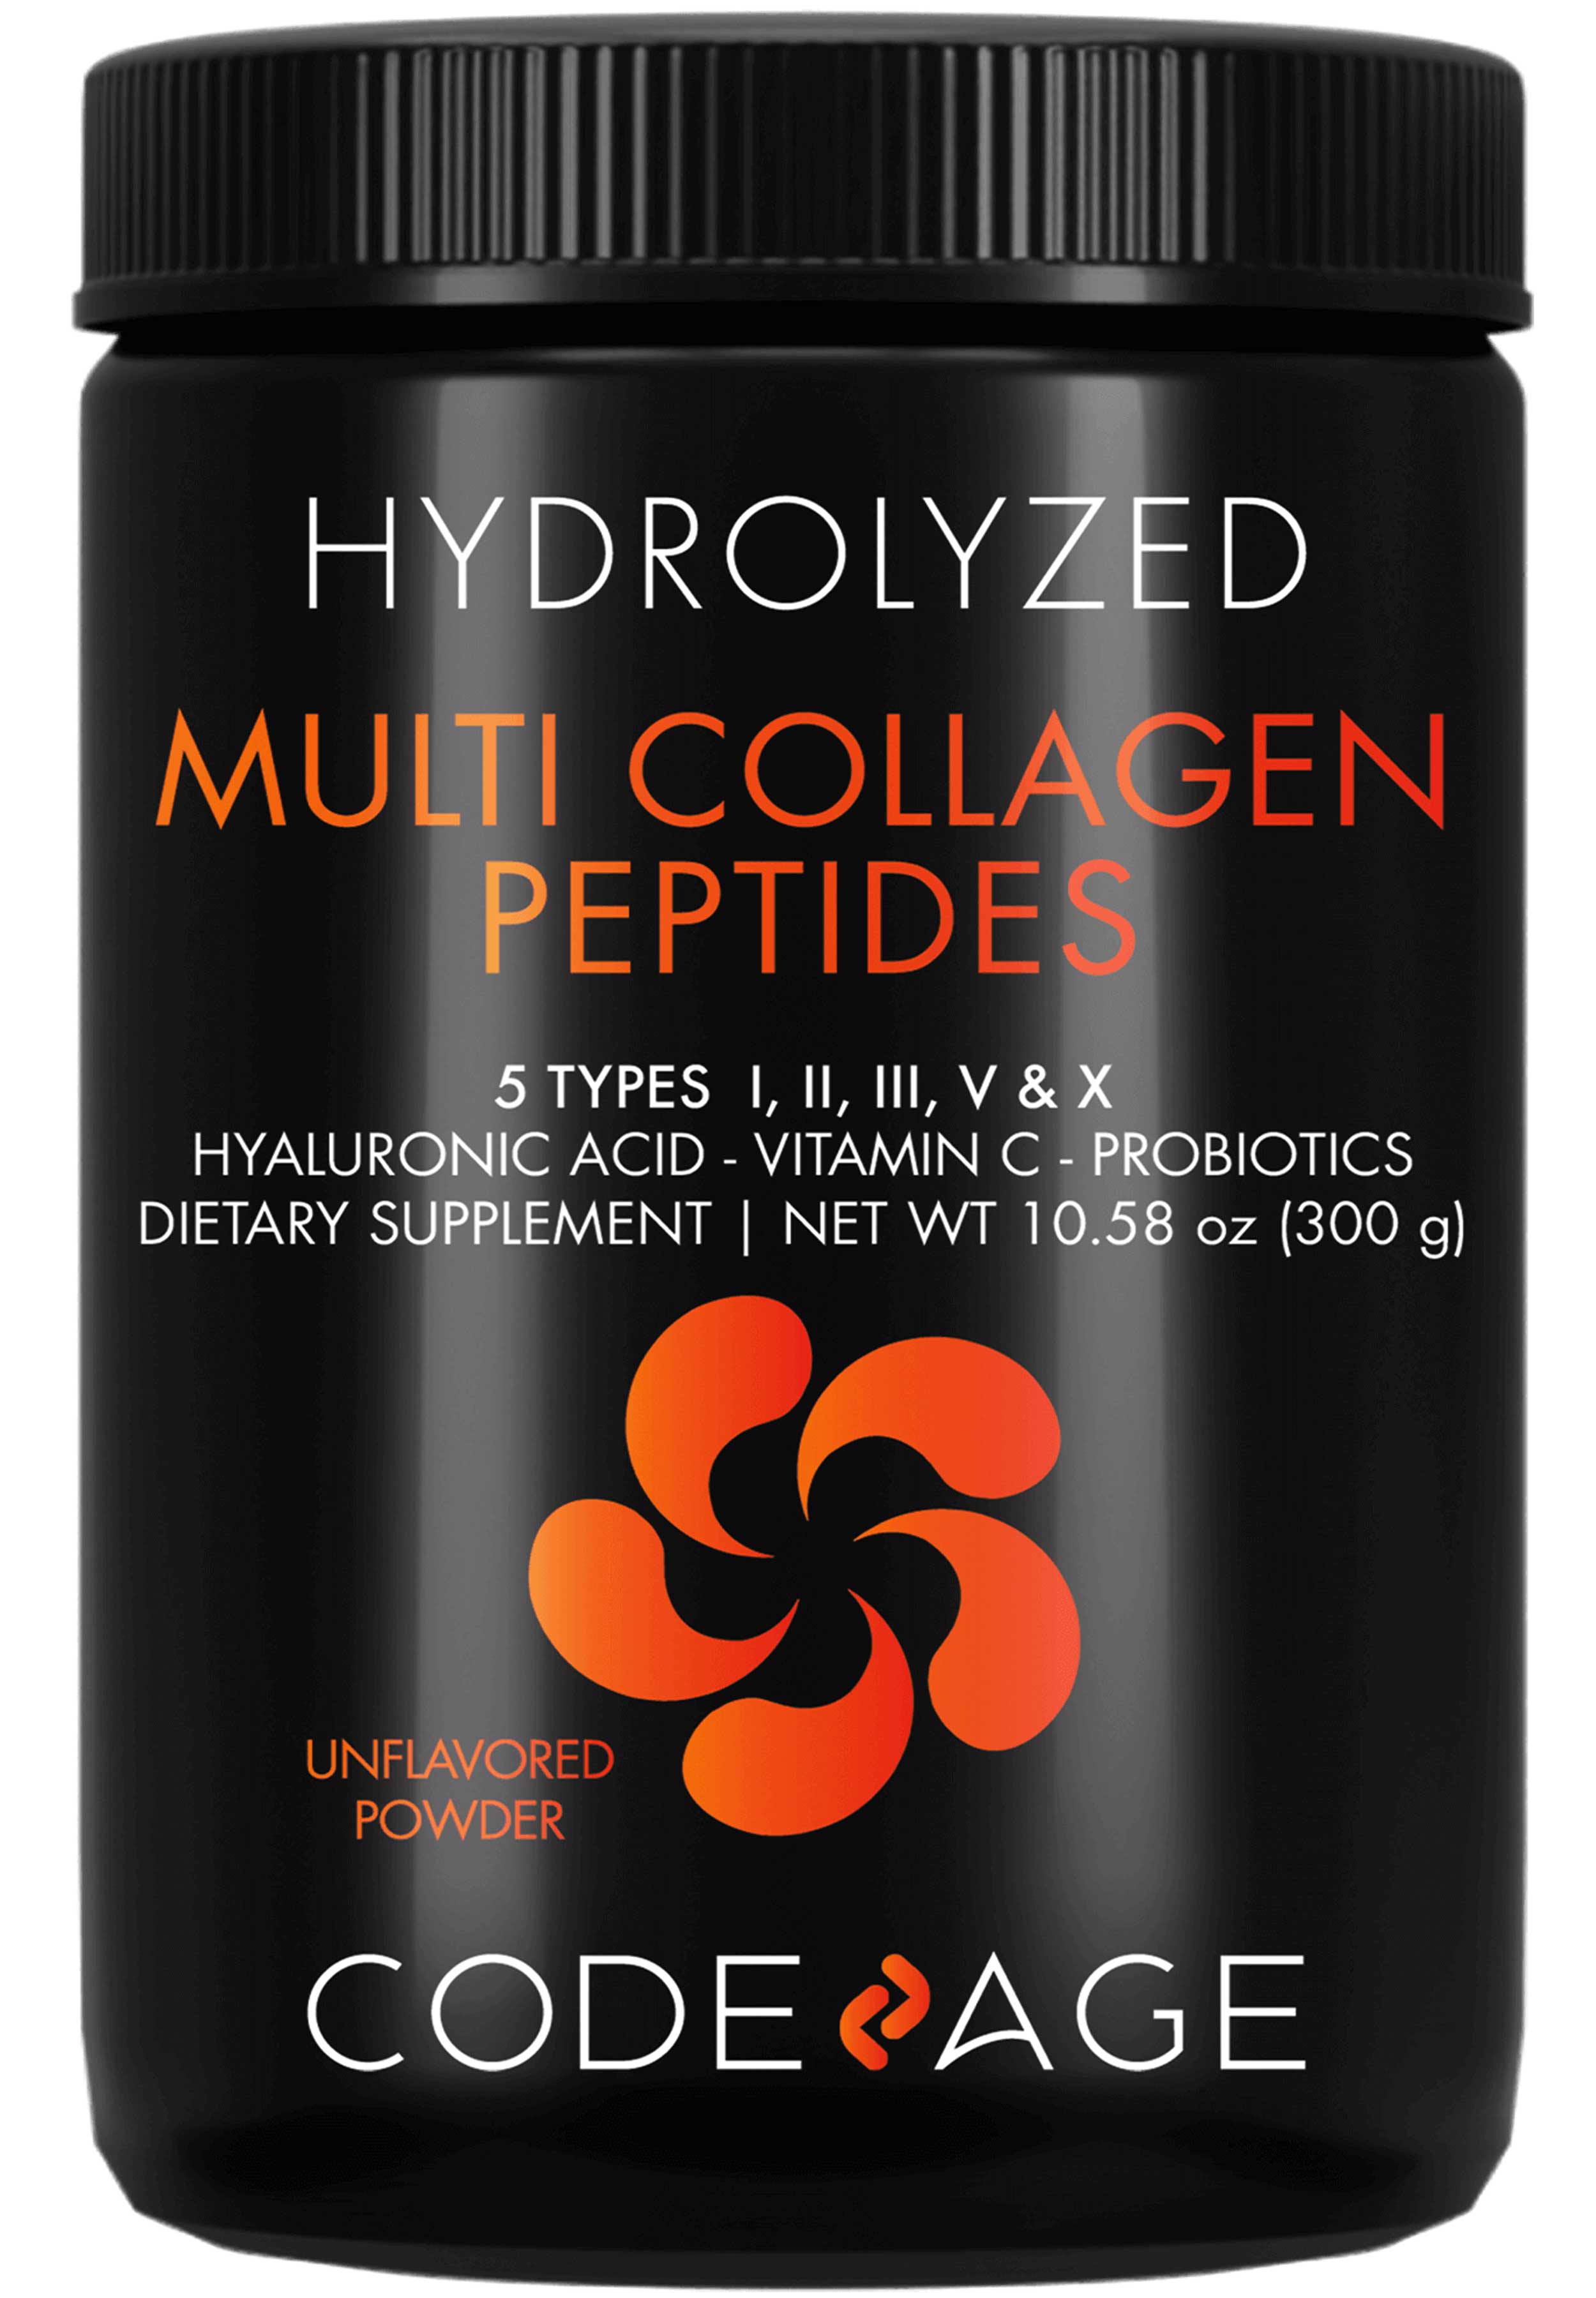 Codeage Hydrolyzed Multi Collagen Peptides